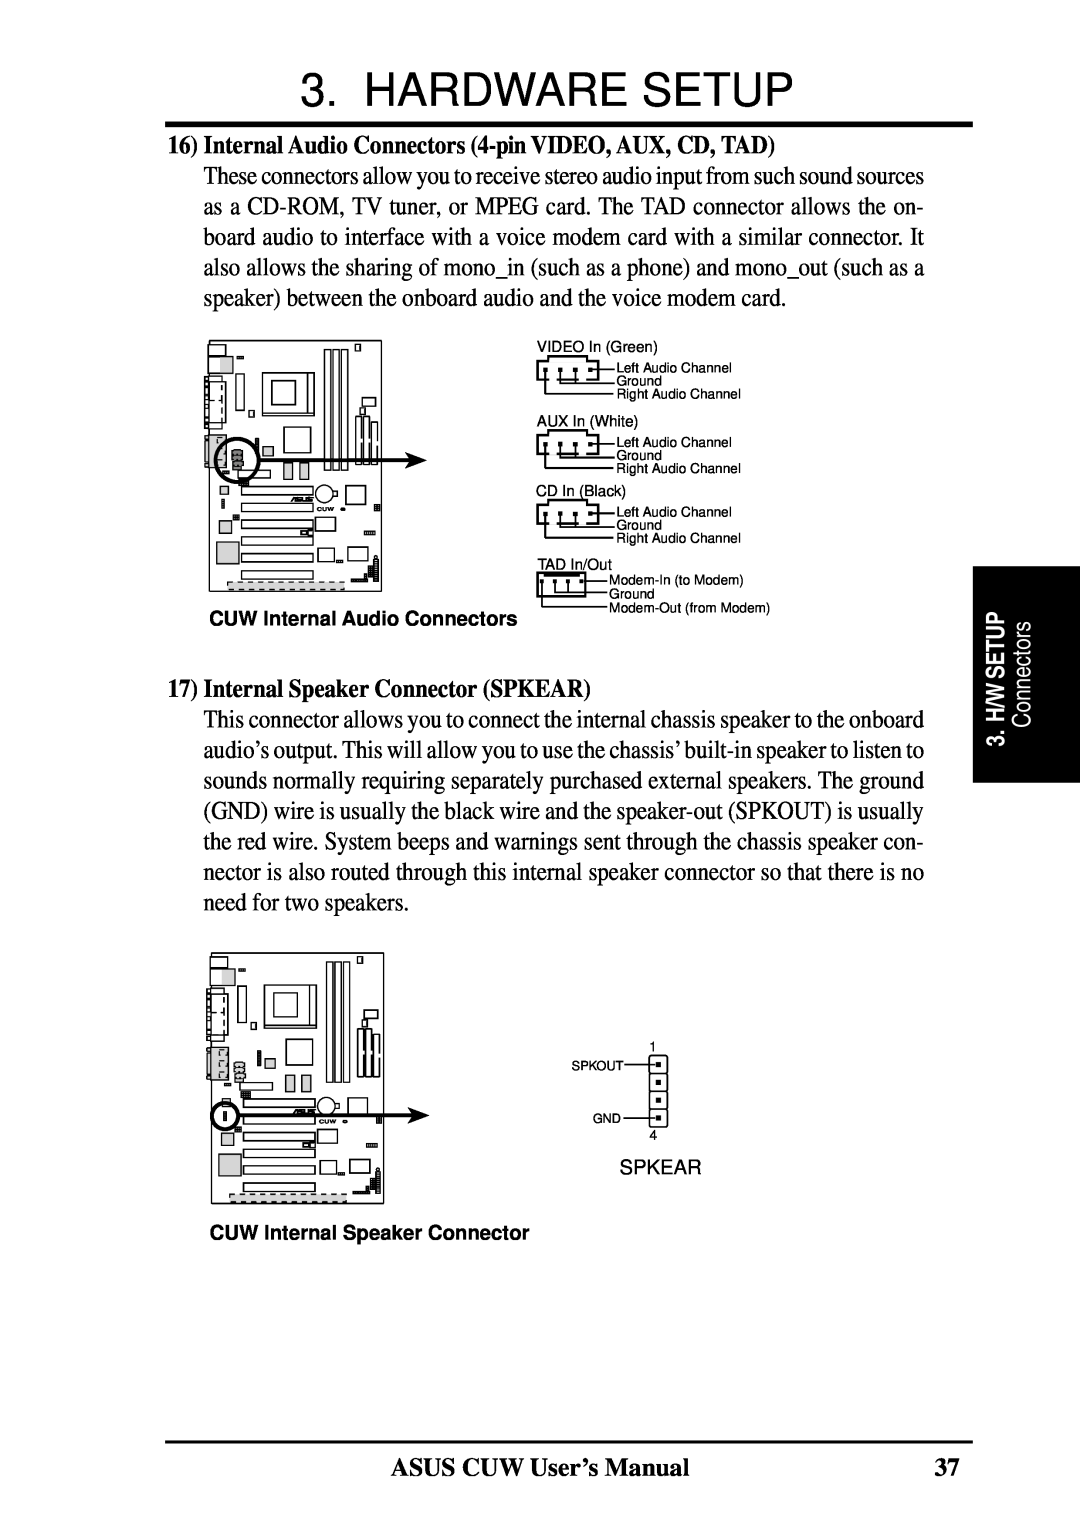 Asus 810 Internal Audio Connectors 4-pin VIDEO, AUX, CD, TAD, Internal Speaker Connector SPKEAR, Hardware Setup, 3 H/W 